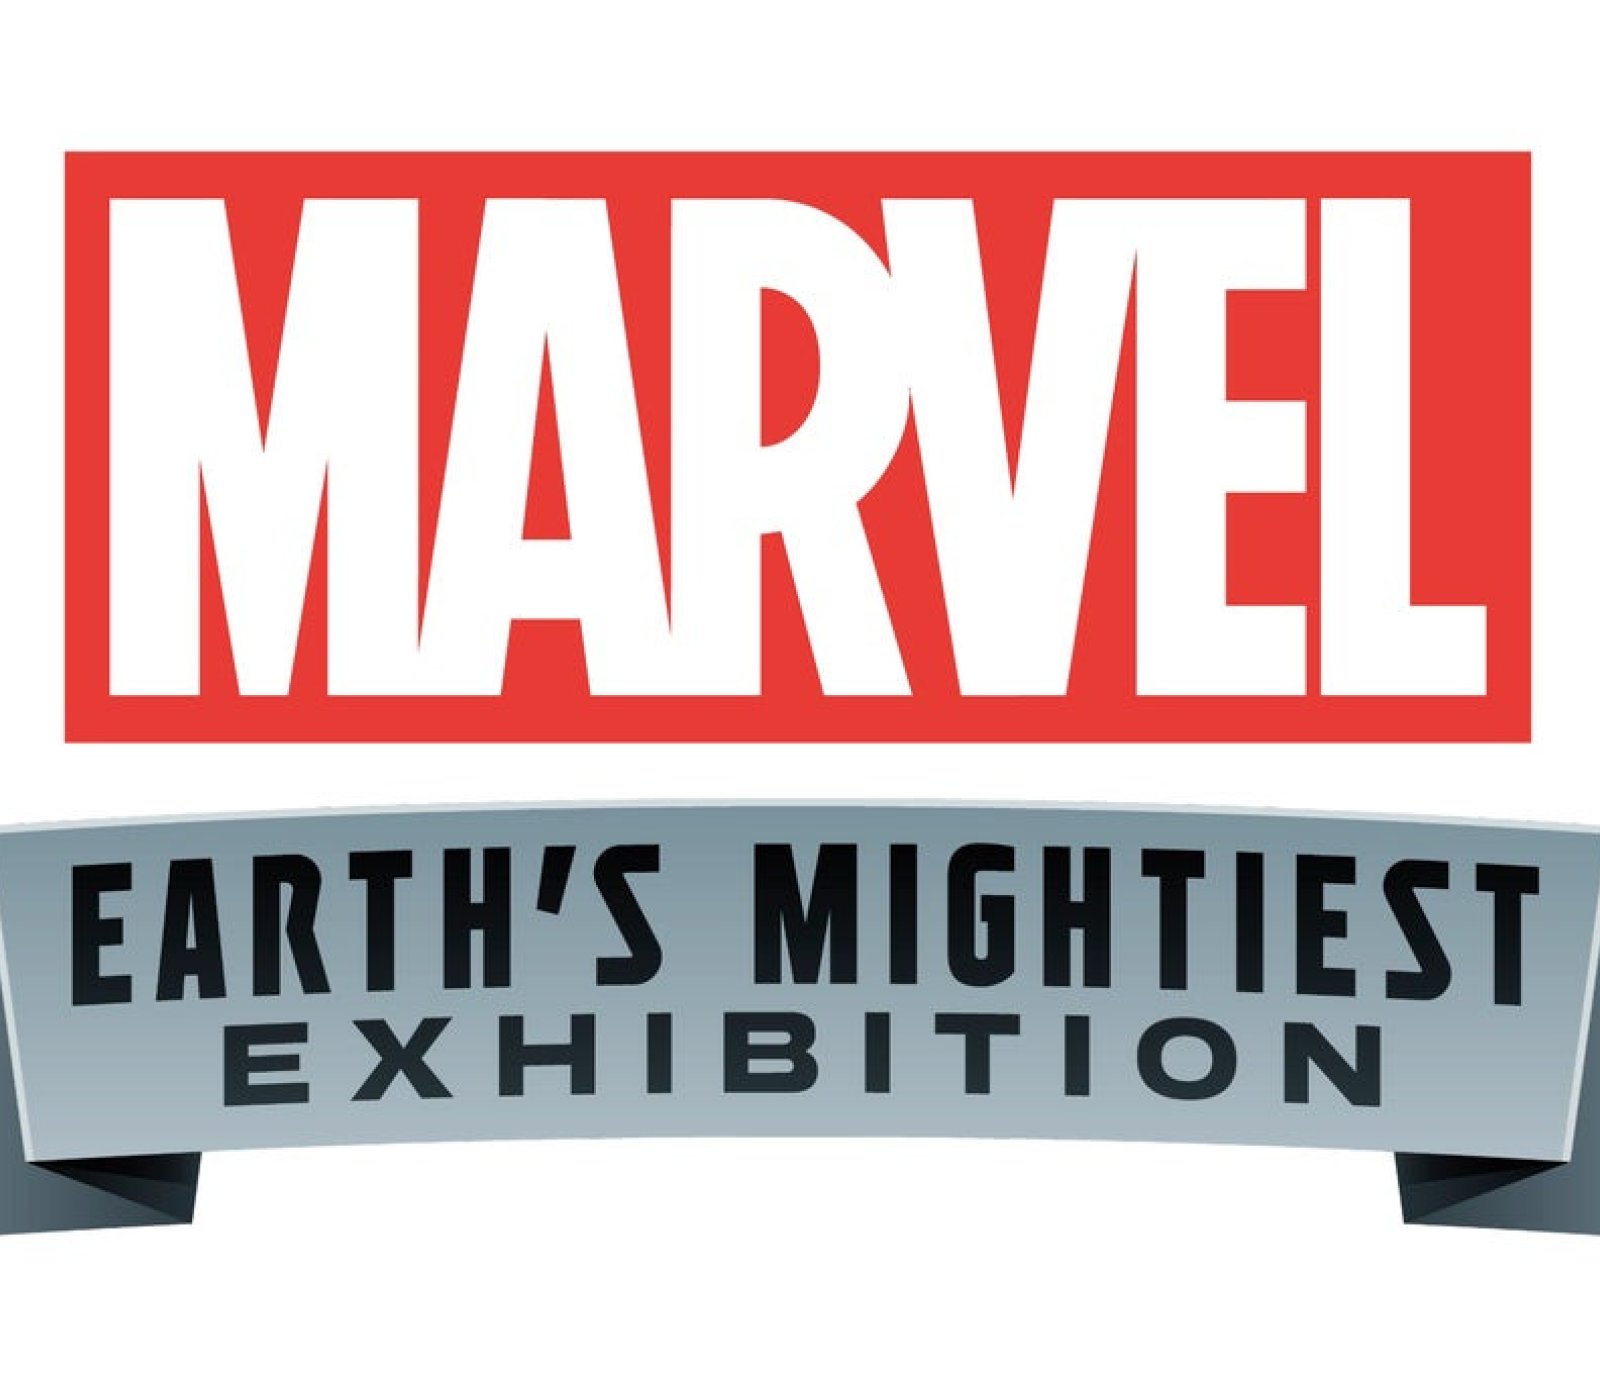 Marvel: Earth’s Mightiest Exhibition